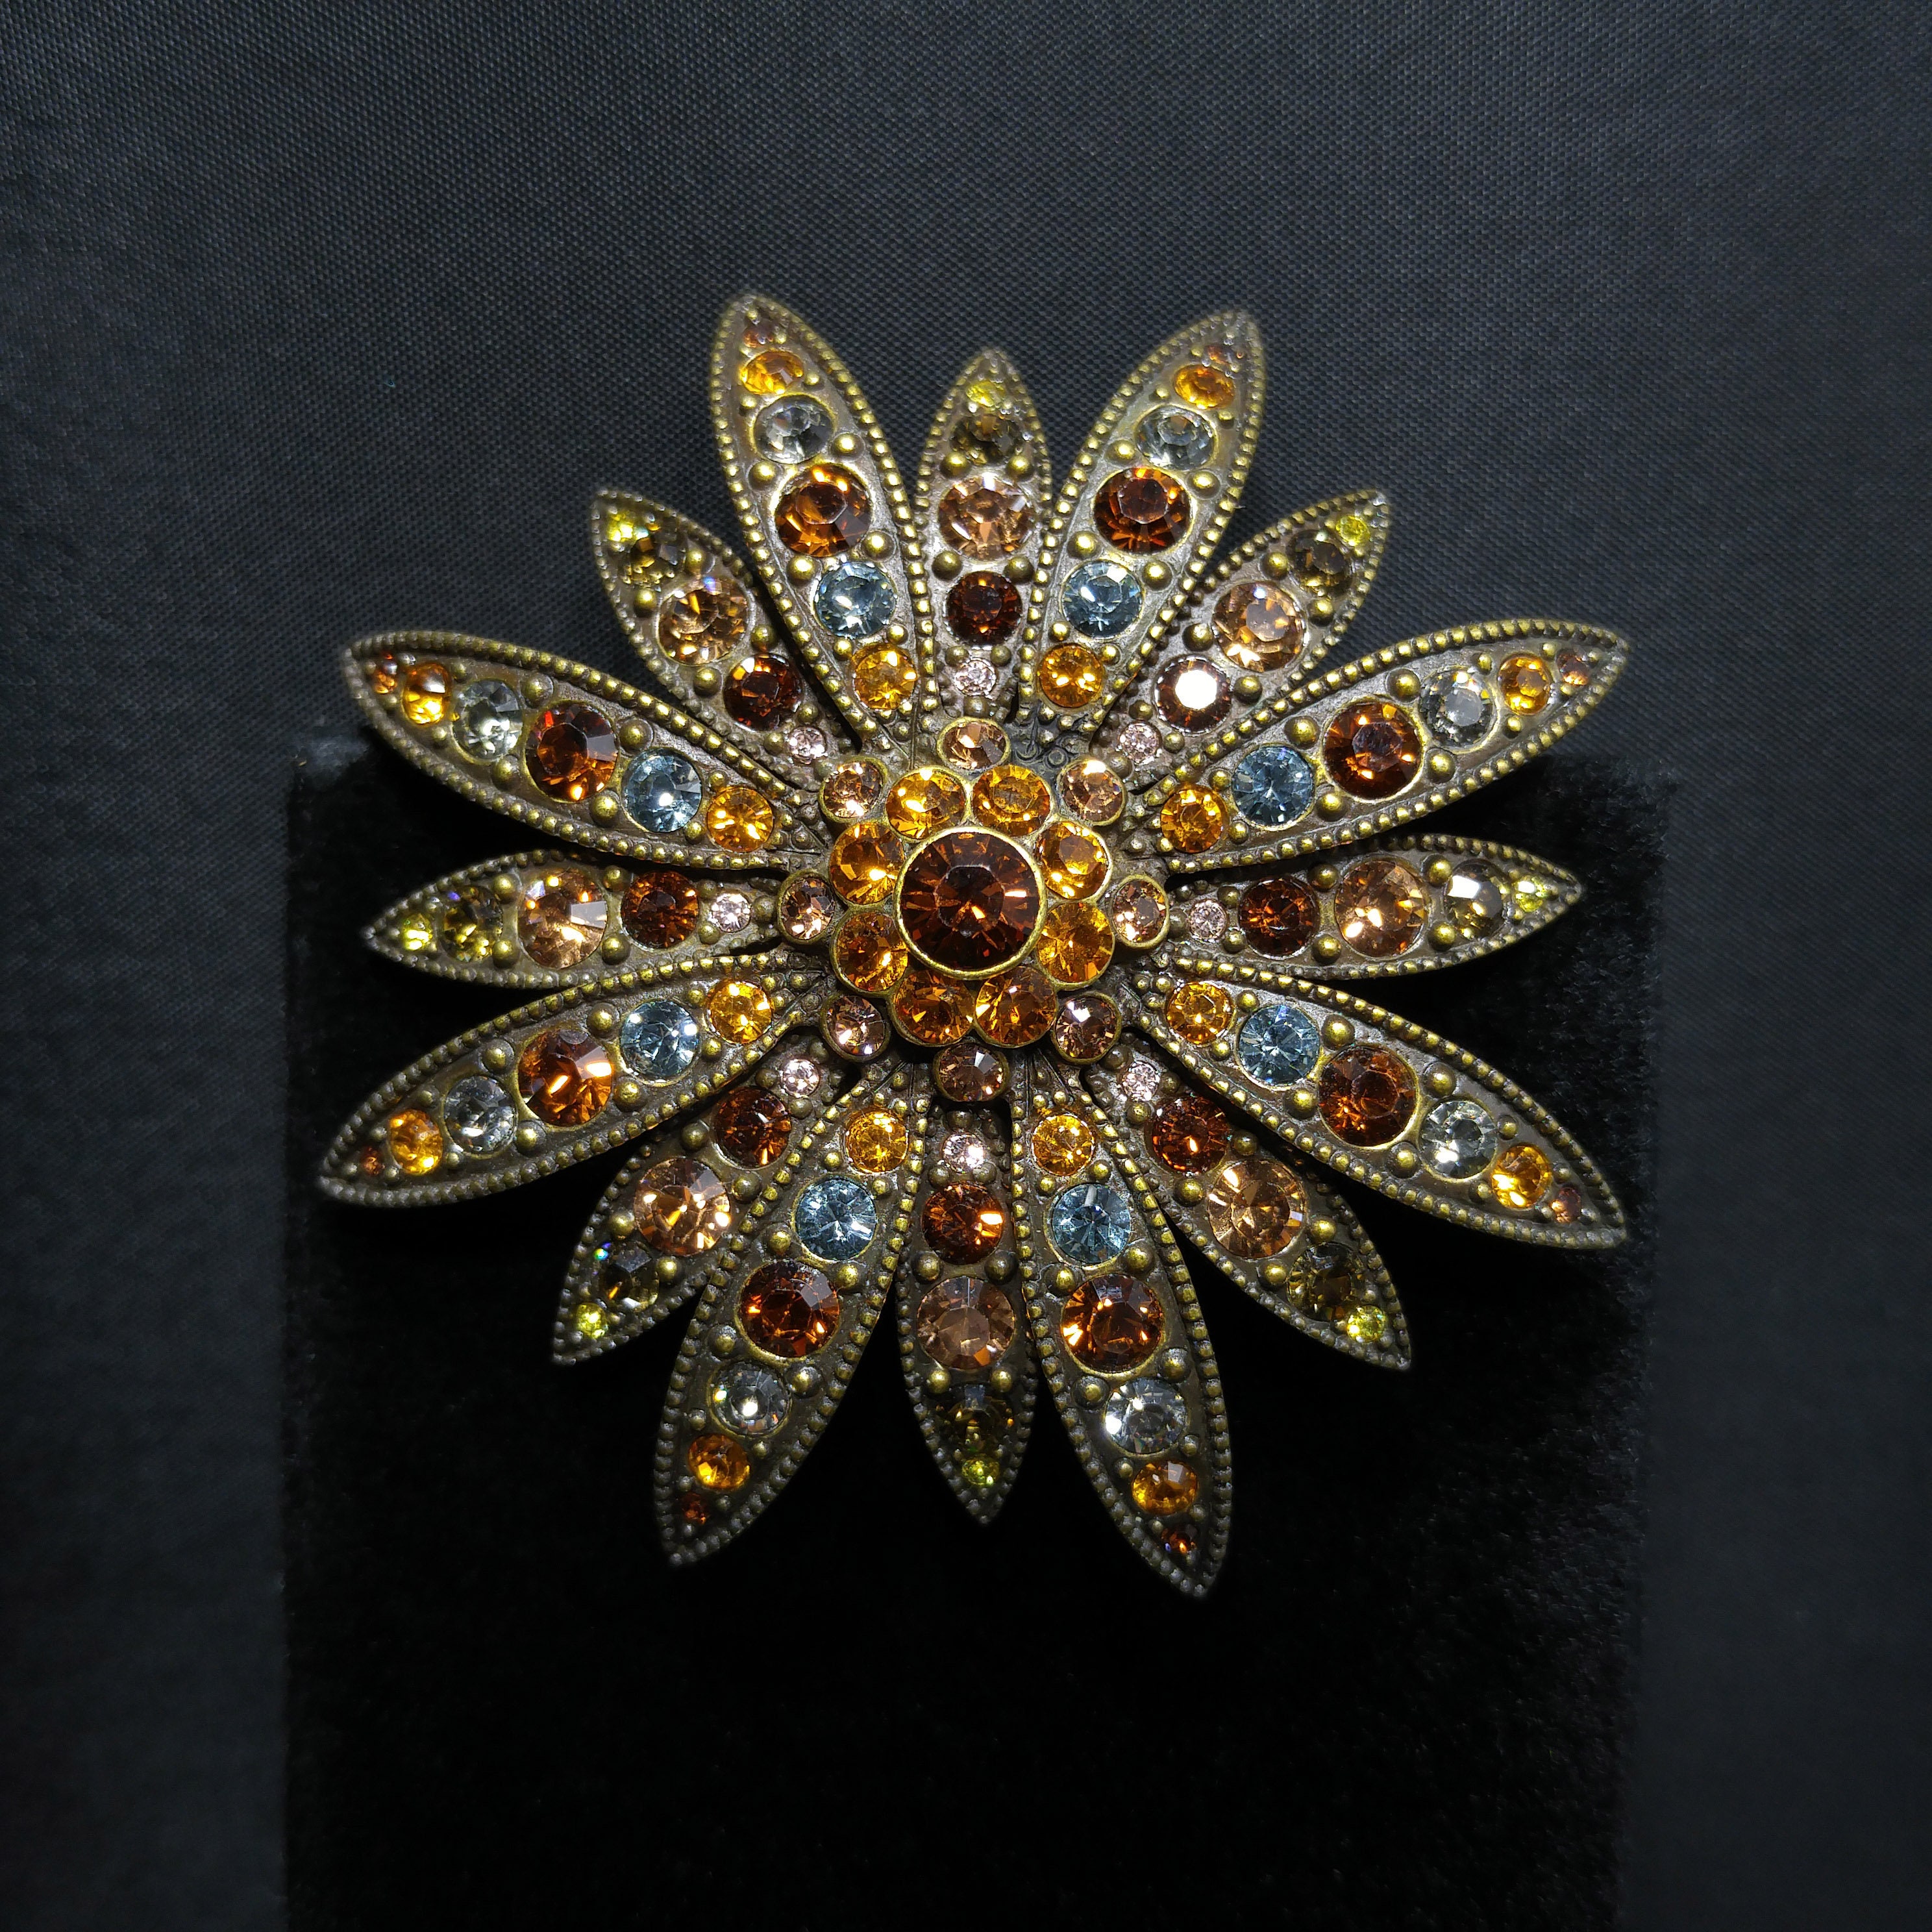 Swarovski Crystal Petite Floral Brooch